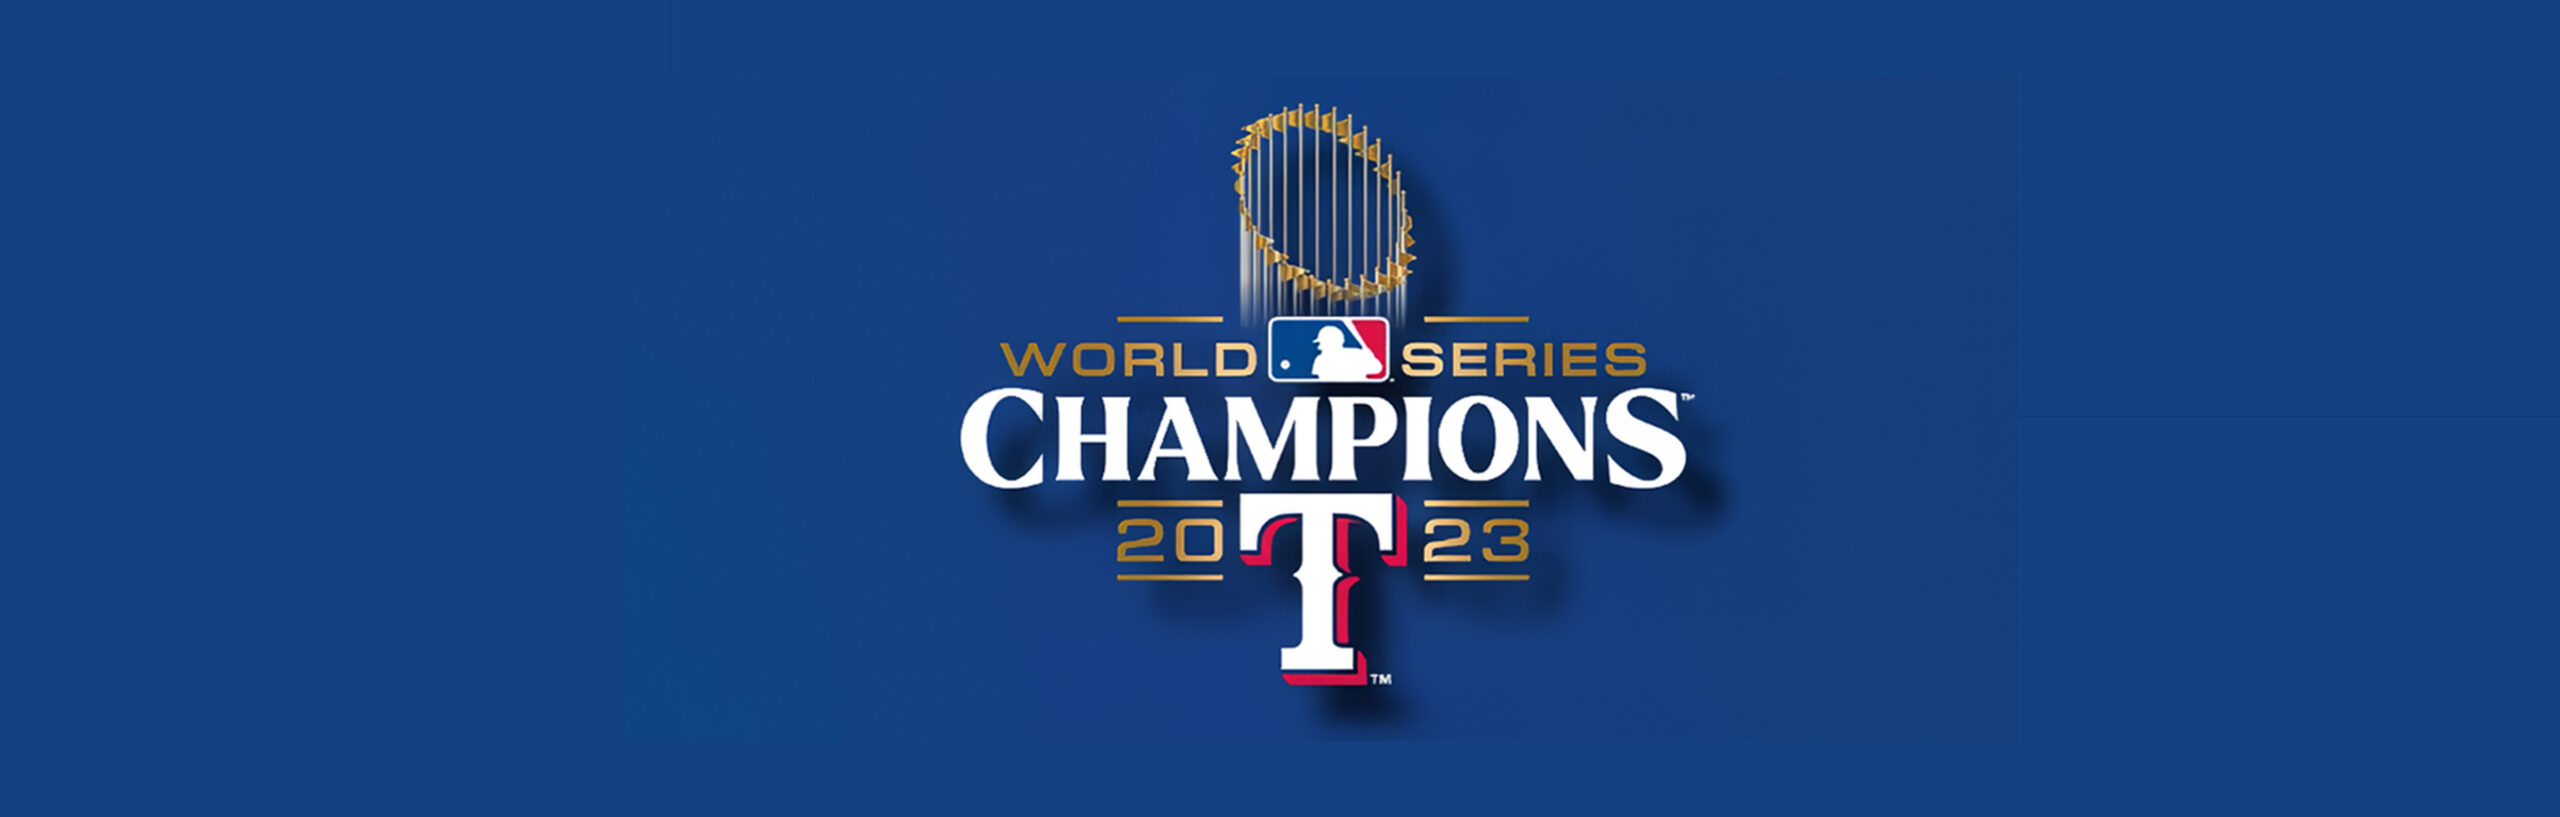 Texas Rangers Baseball World Series Trophy Viewing